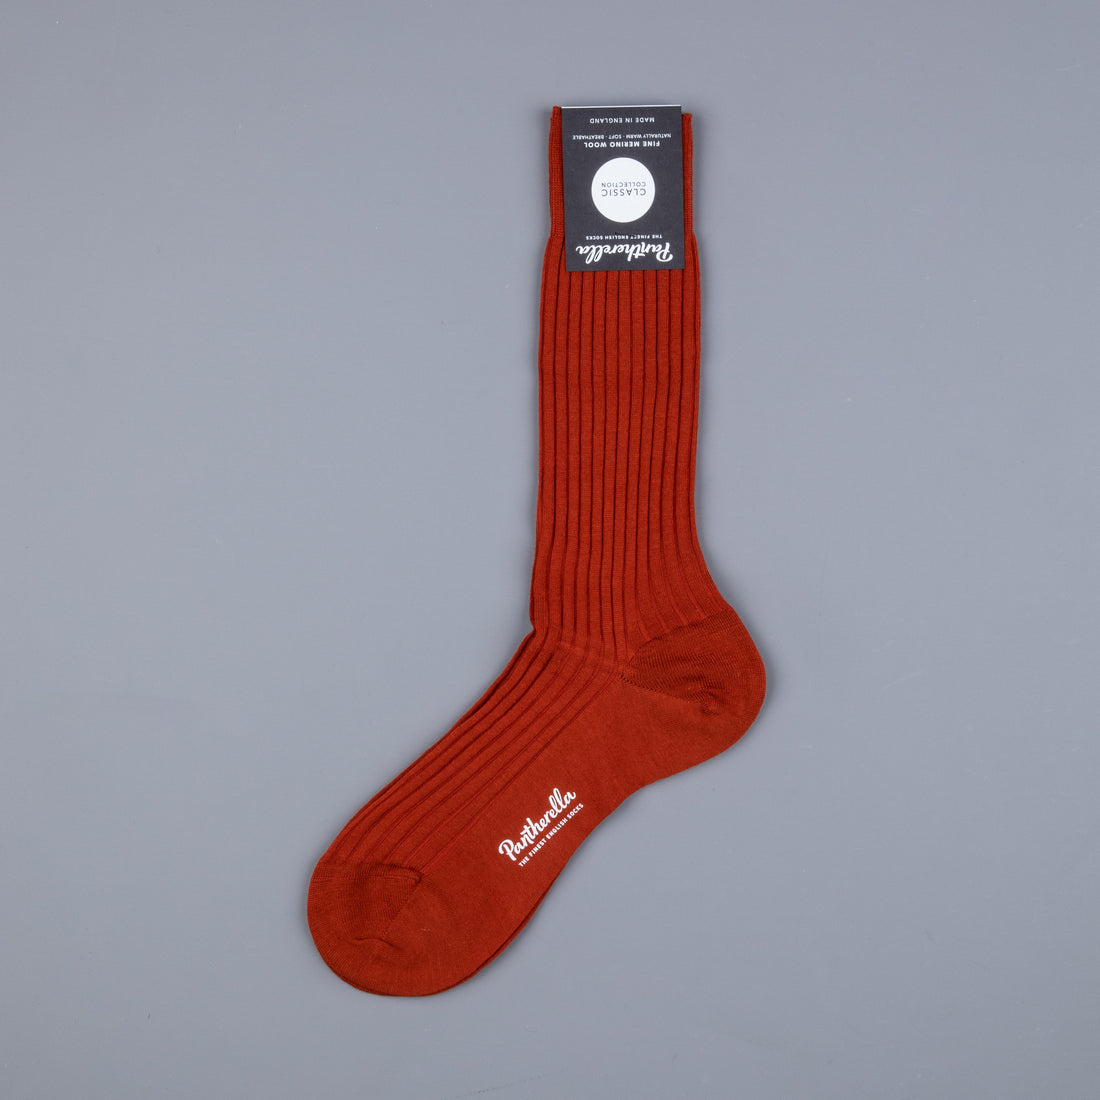 Frans Boone x Pantherella Laburnum Merino Wool Ankle High Socks Russet